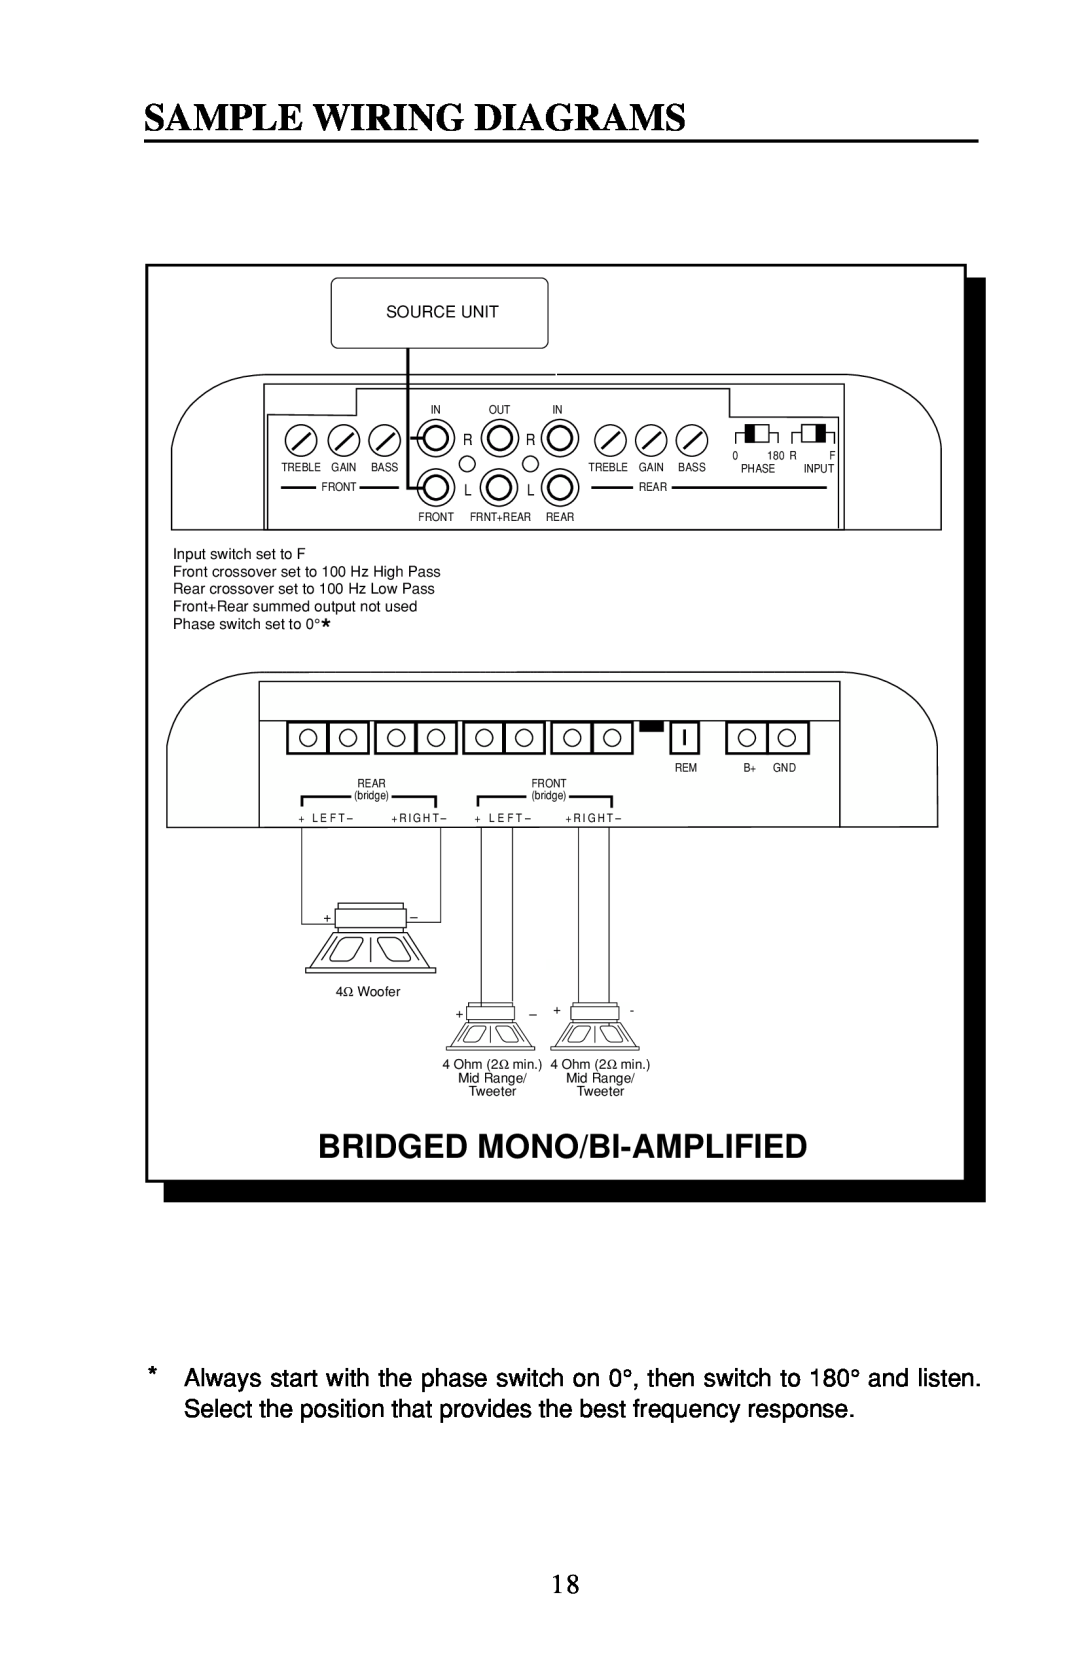 Rockford Fosgate 4-CHANNEL AMPLIFIER owner manual Sample Wiring Diagrams, Bridged Mono/Bi-Amplified, Source Unit 